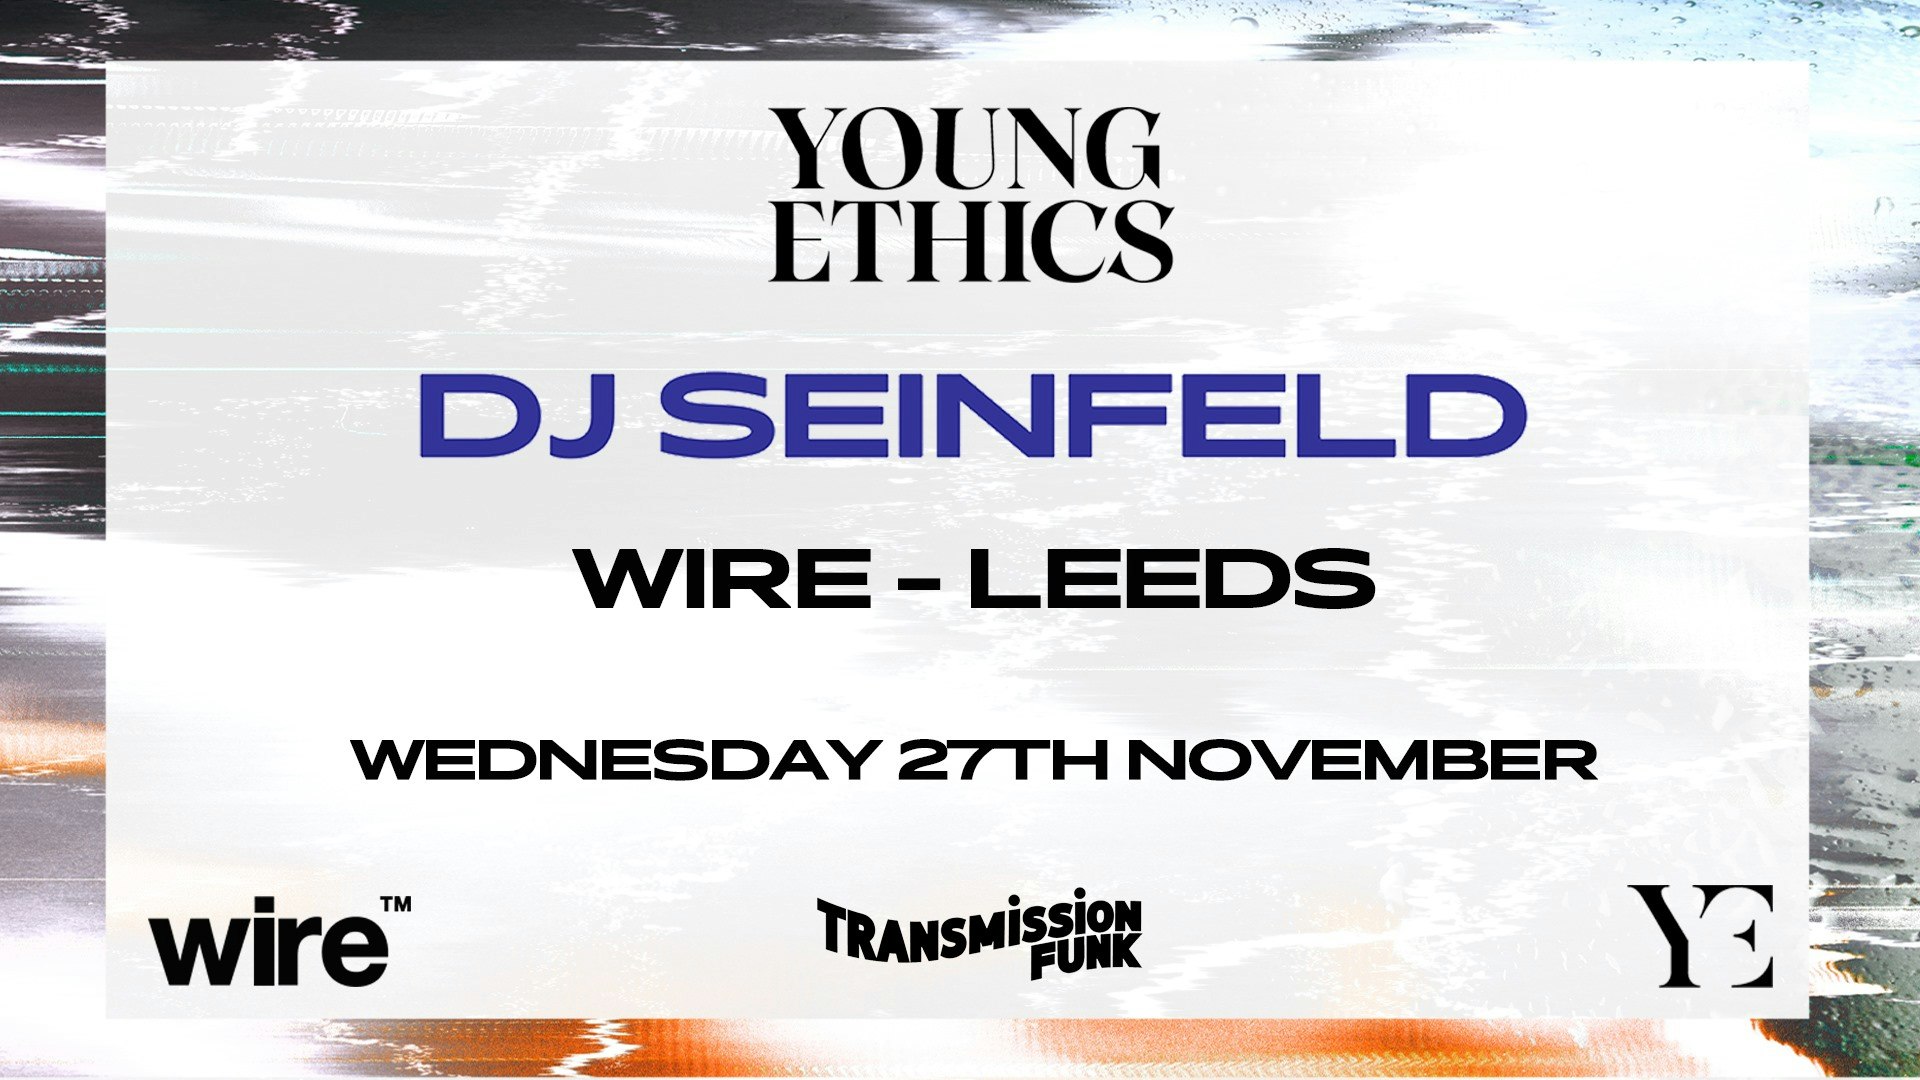 Transmission Funk presents DJ Seinfeld – Young Ethics tour